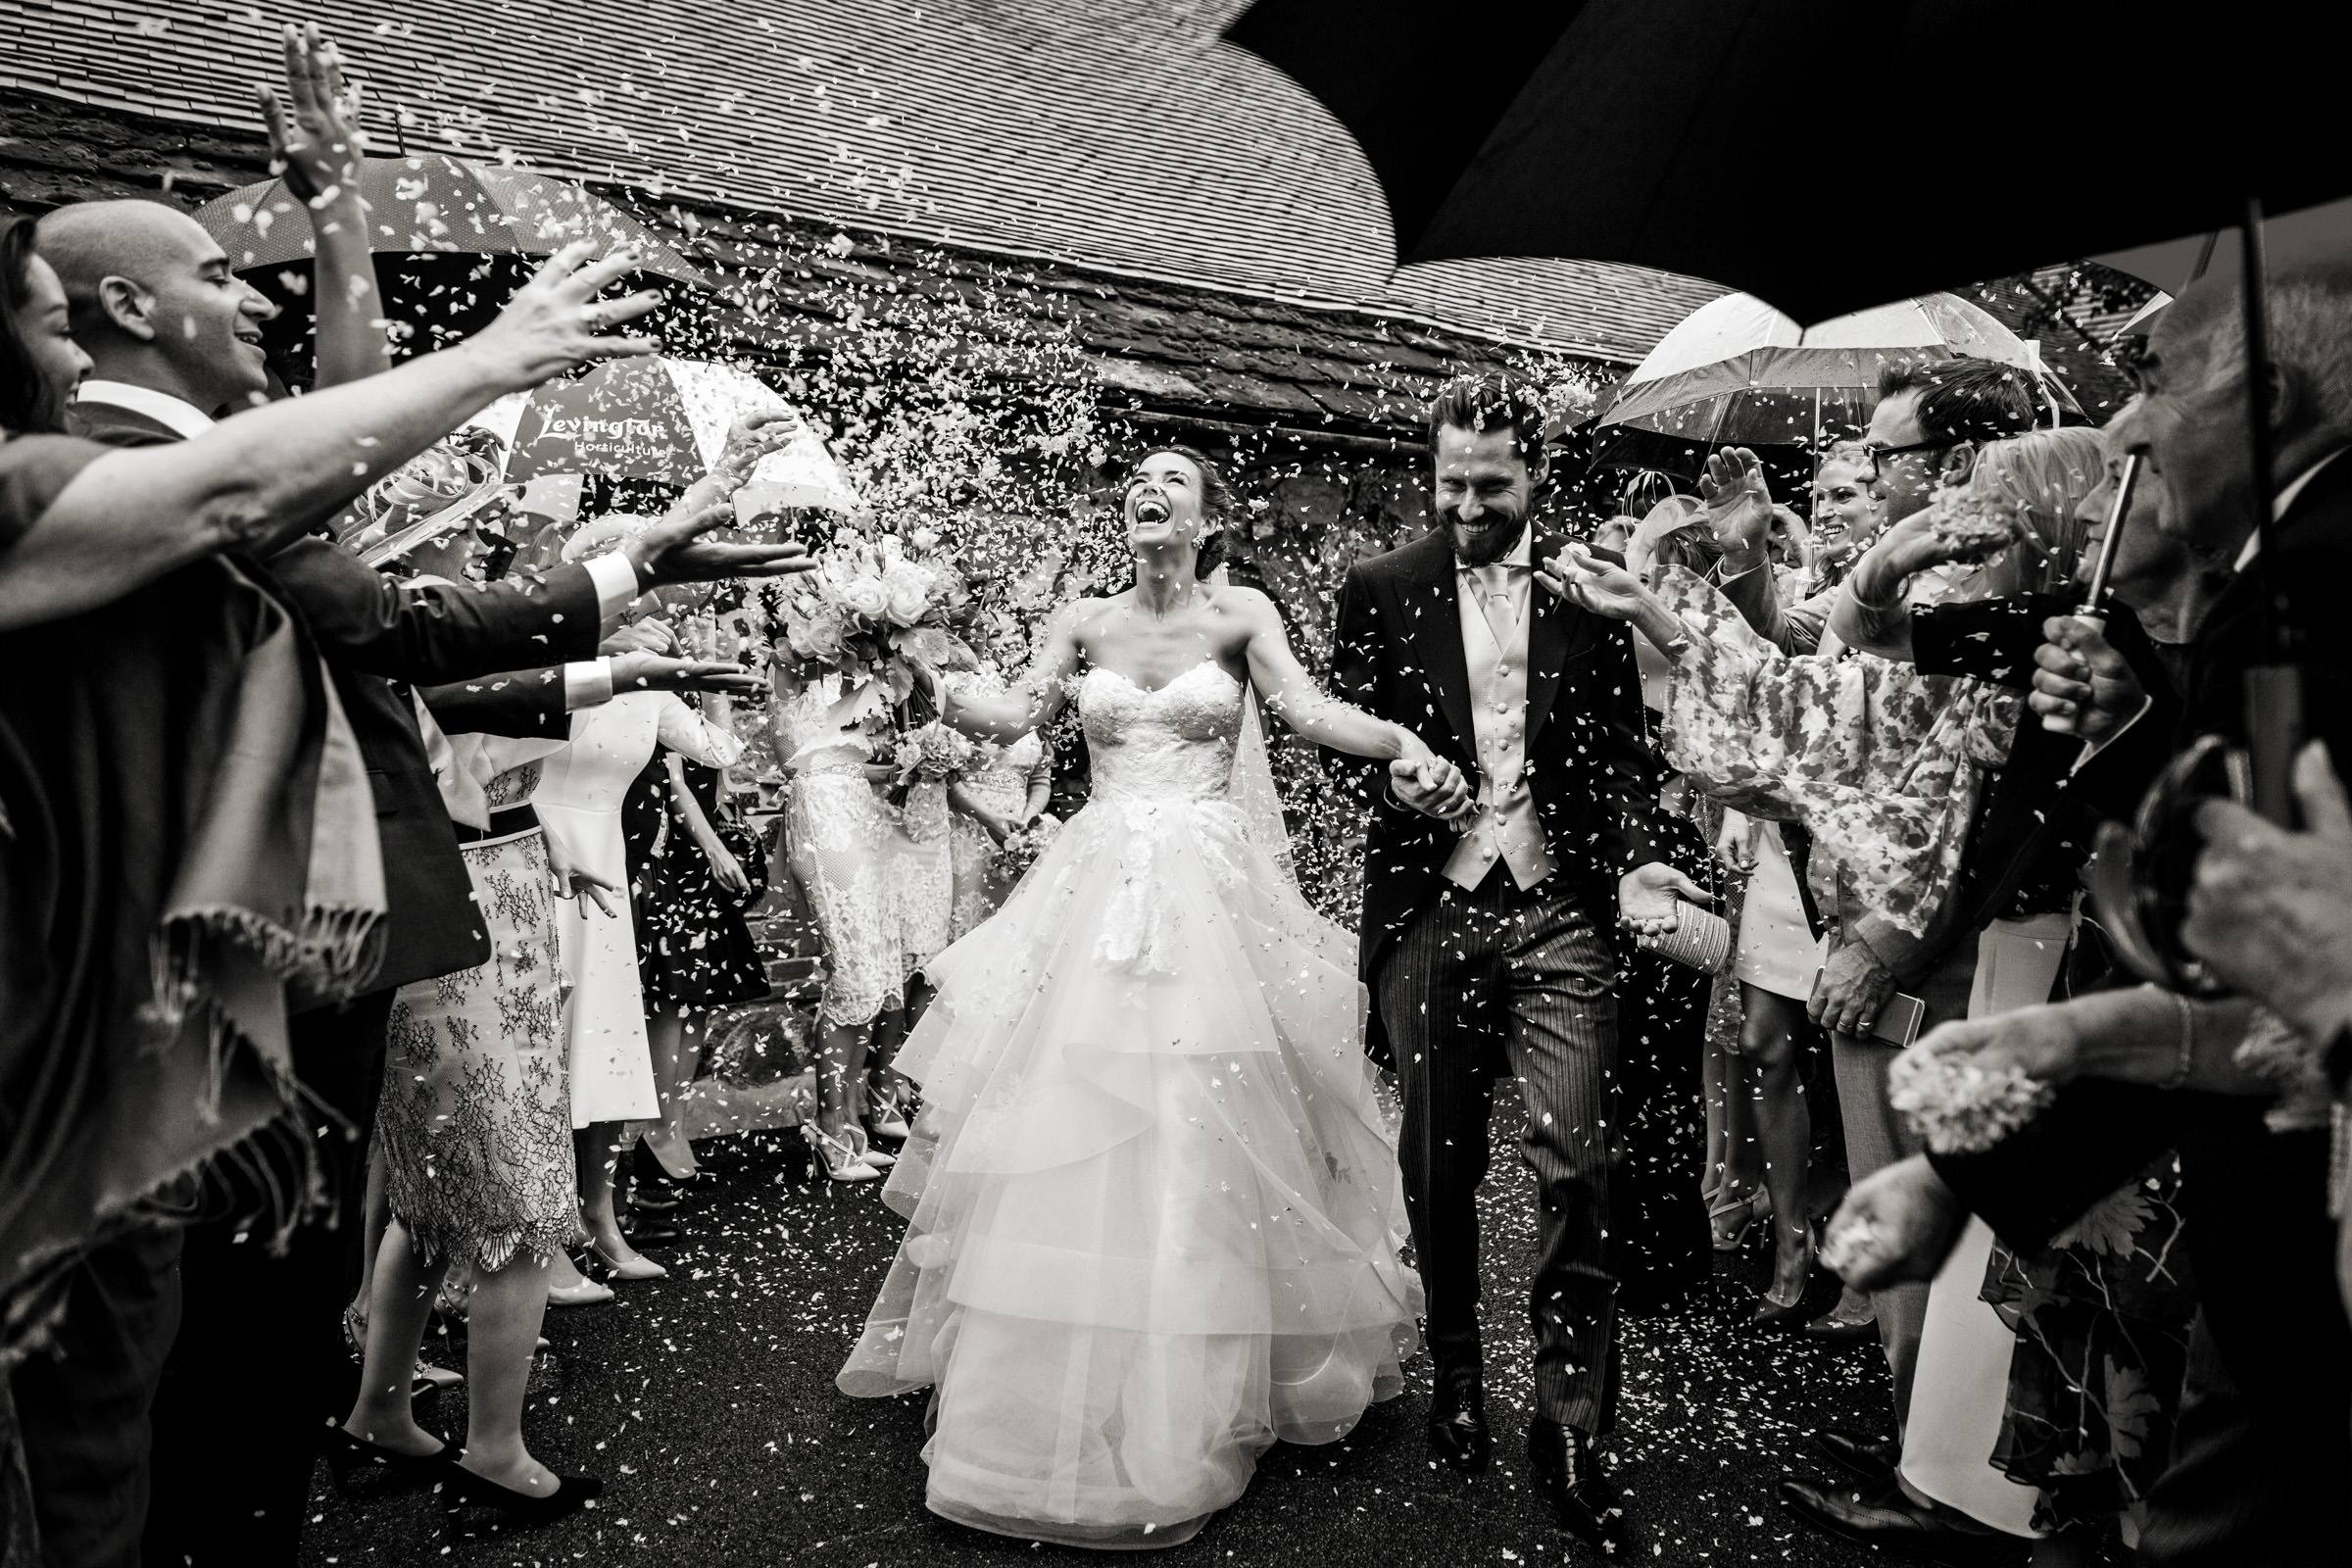 Documentary Wedding Photography by Photographer A.Freeman